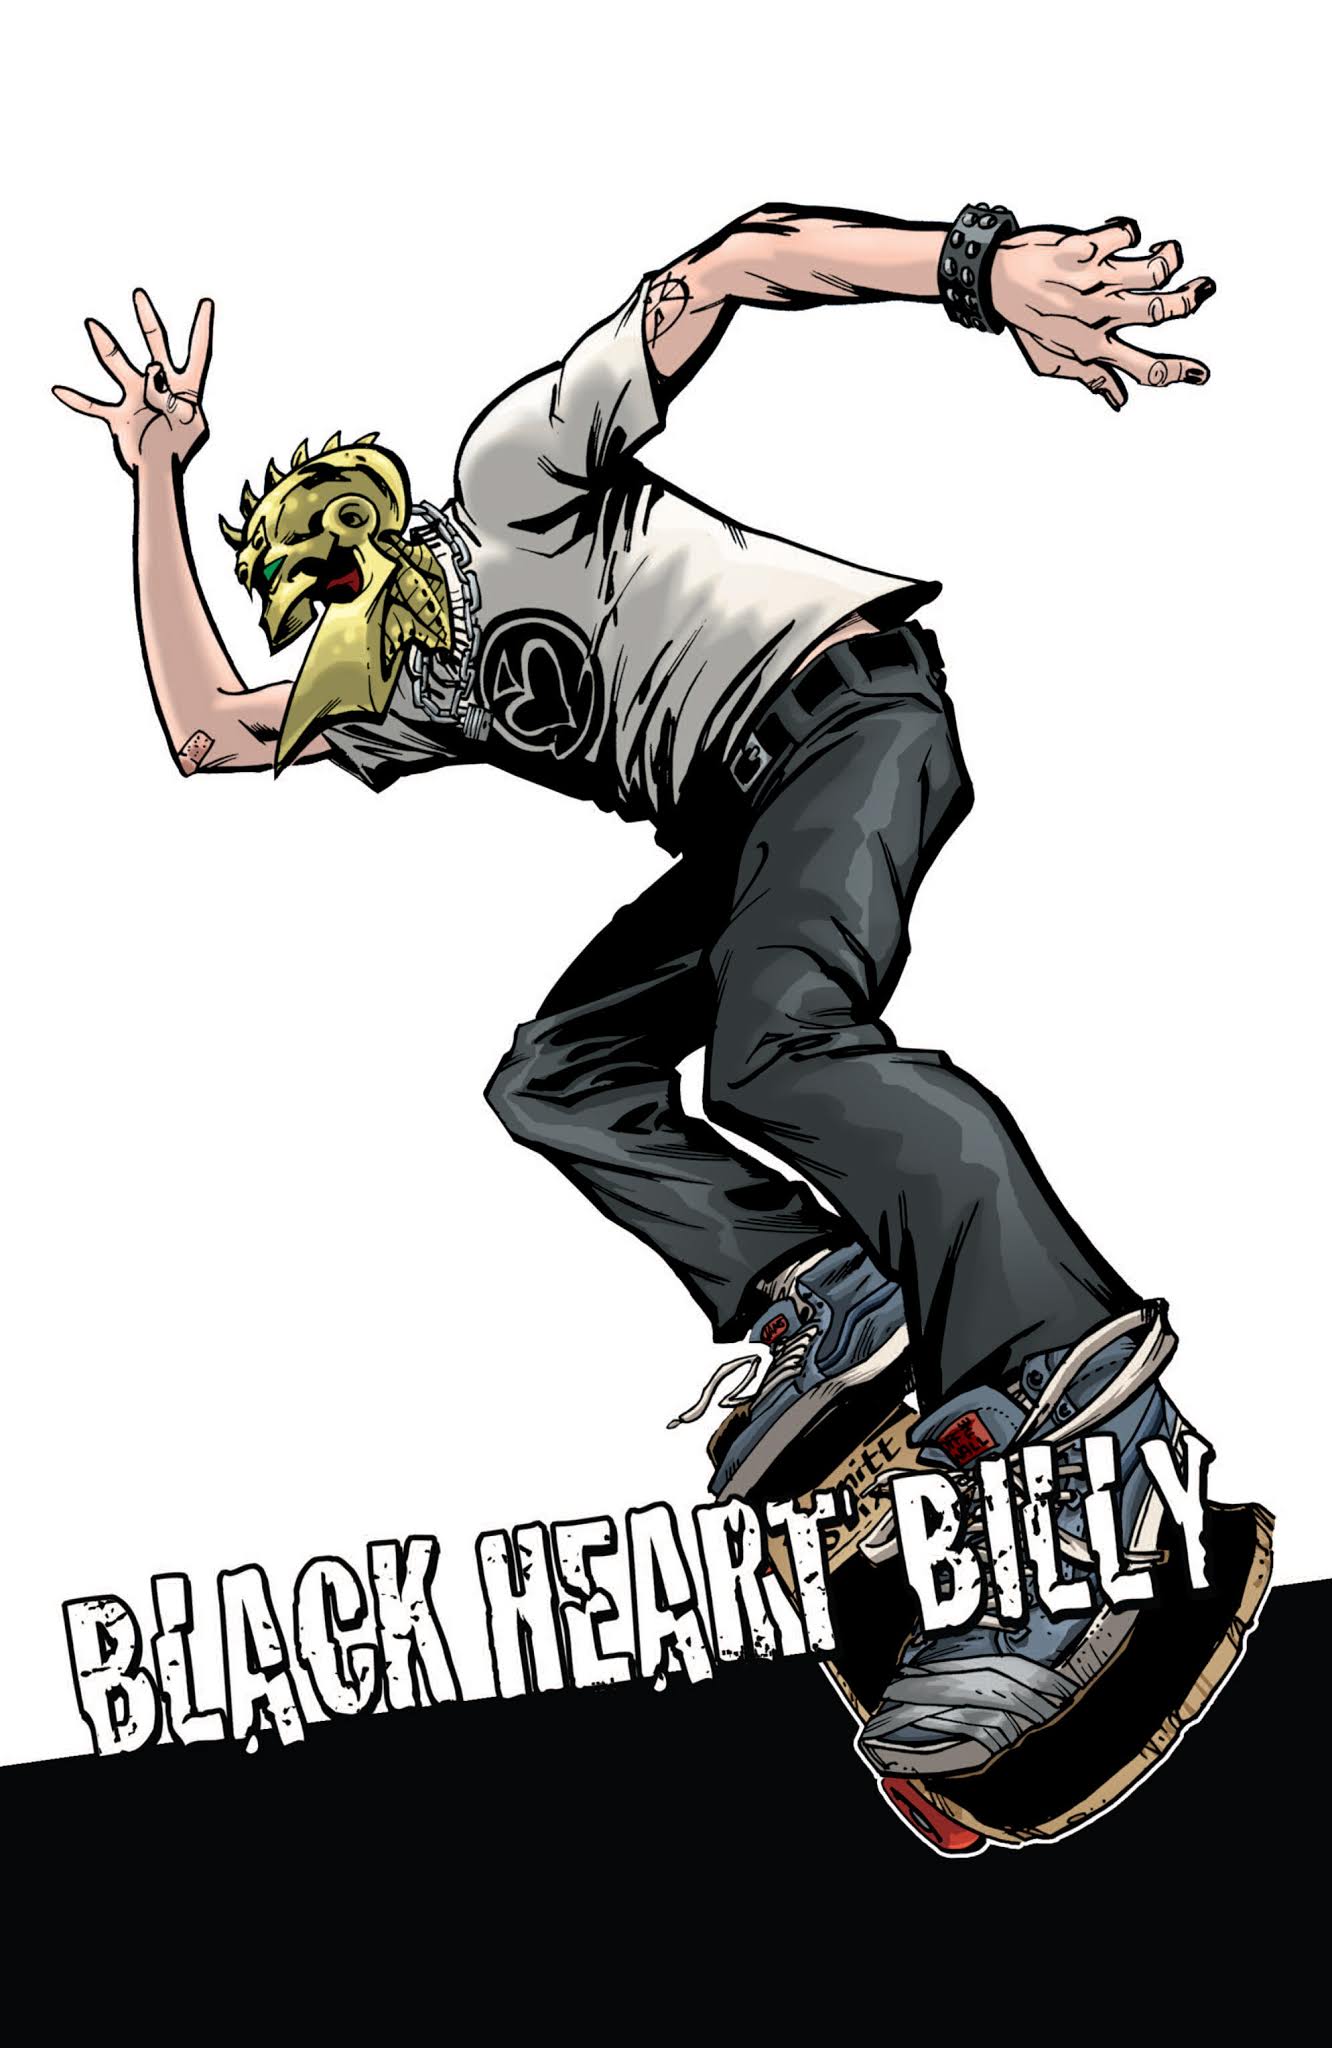 Read online Black Heart Billy comic -  Issue # TPB - 2